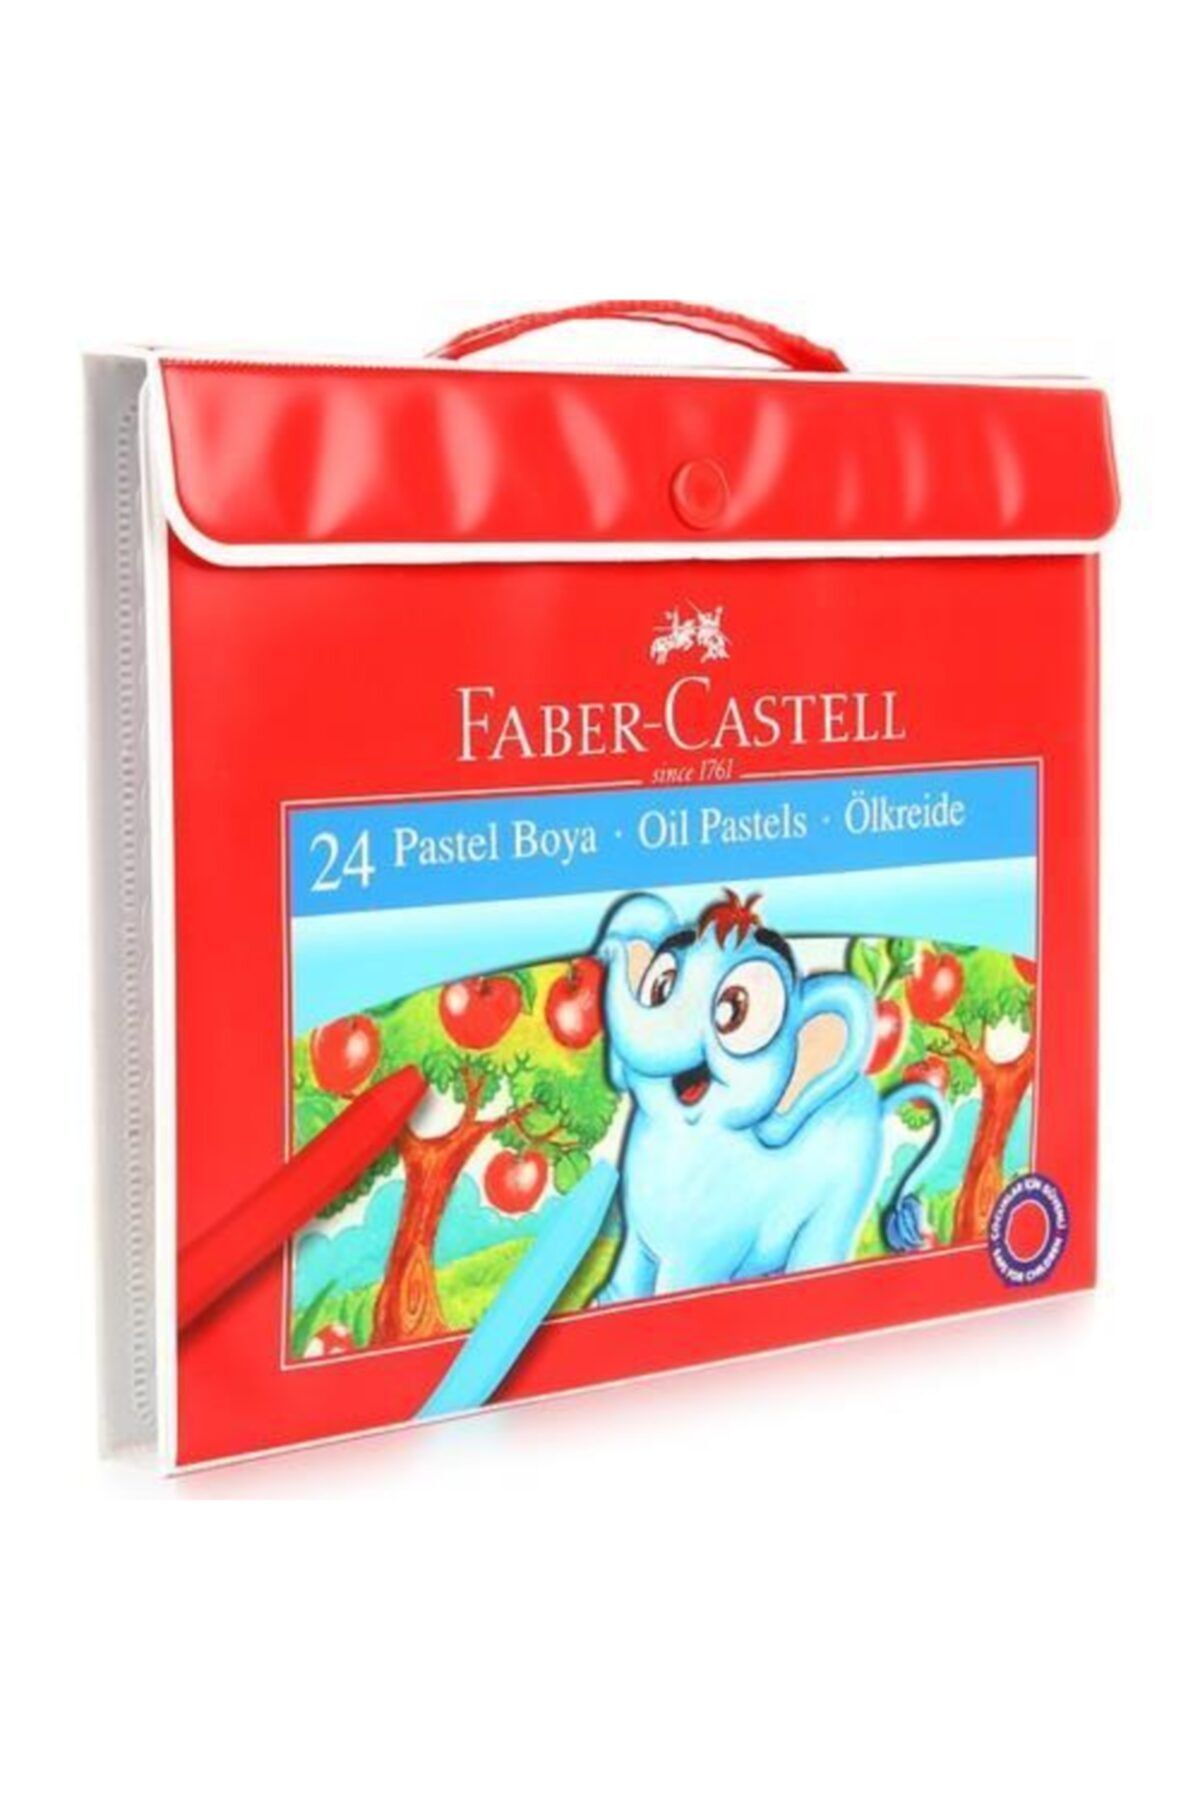 Faber Castell Faber-castell Pastel Boya Çantalı Köşeli 24 Renk 5281 125125